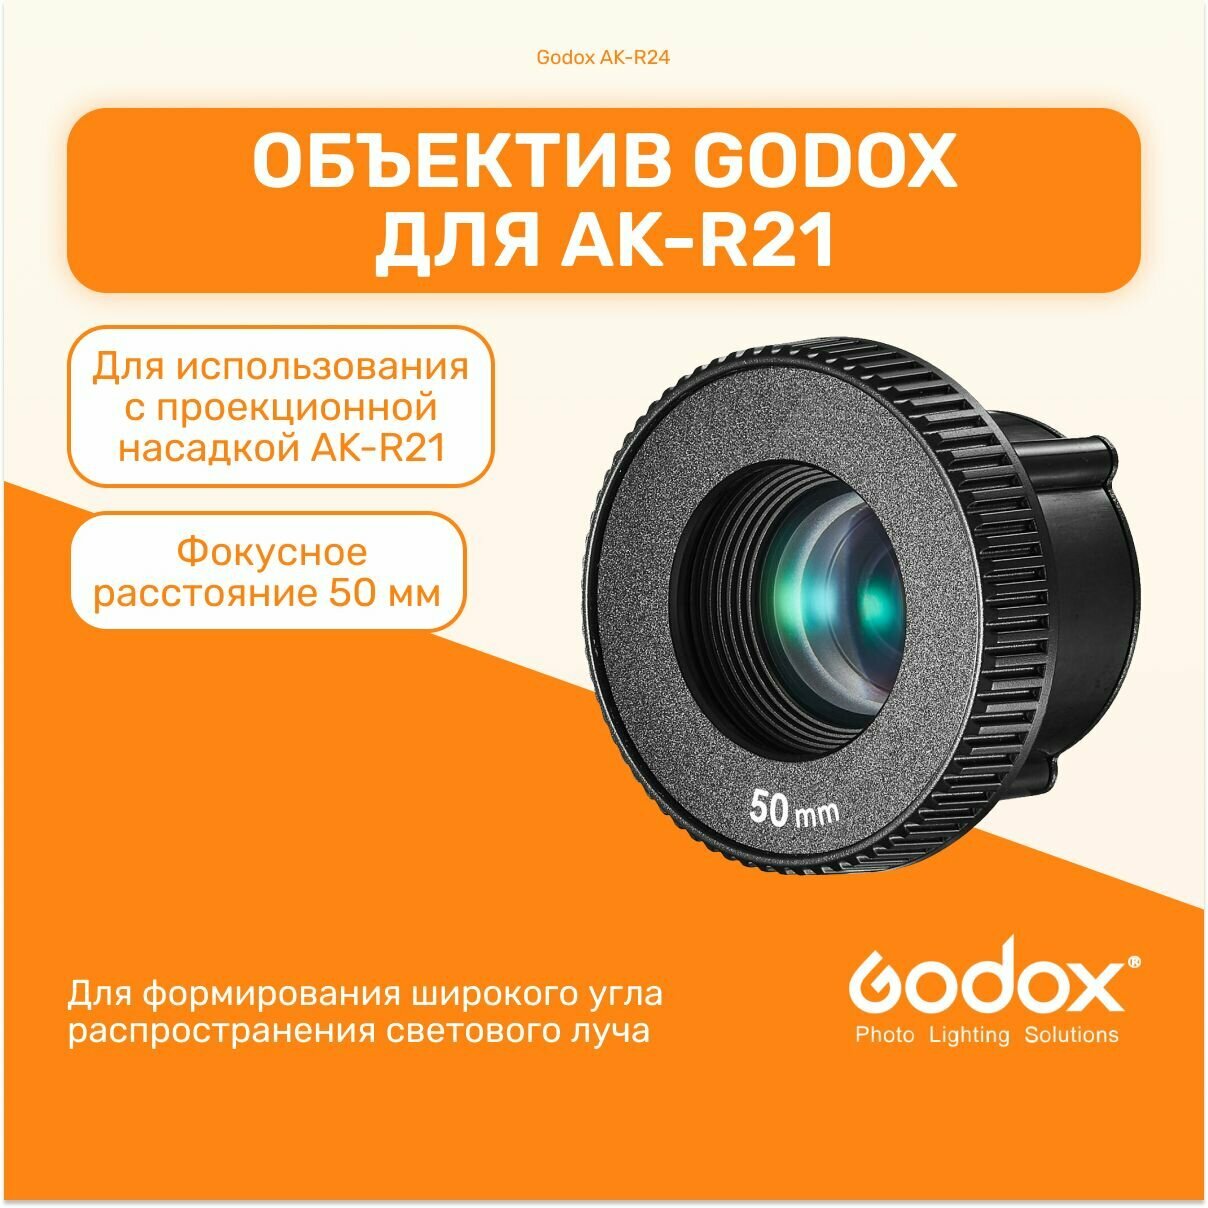 Объектив Godox AK-R24 для проекционной насадки AK-R21 студийный свет для фото и видео съемок